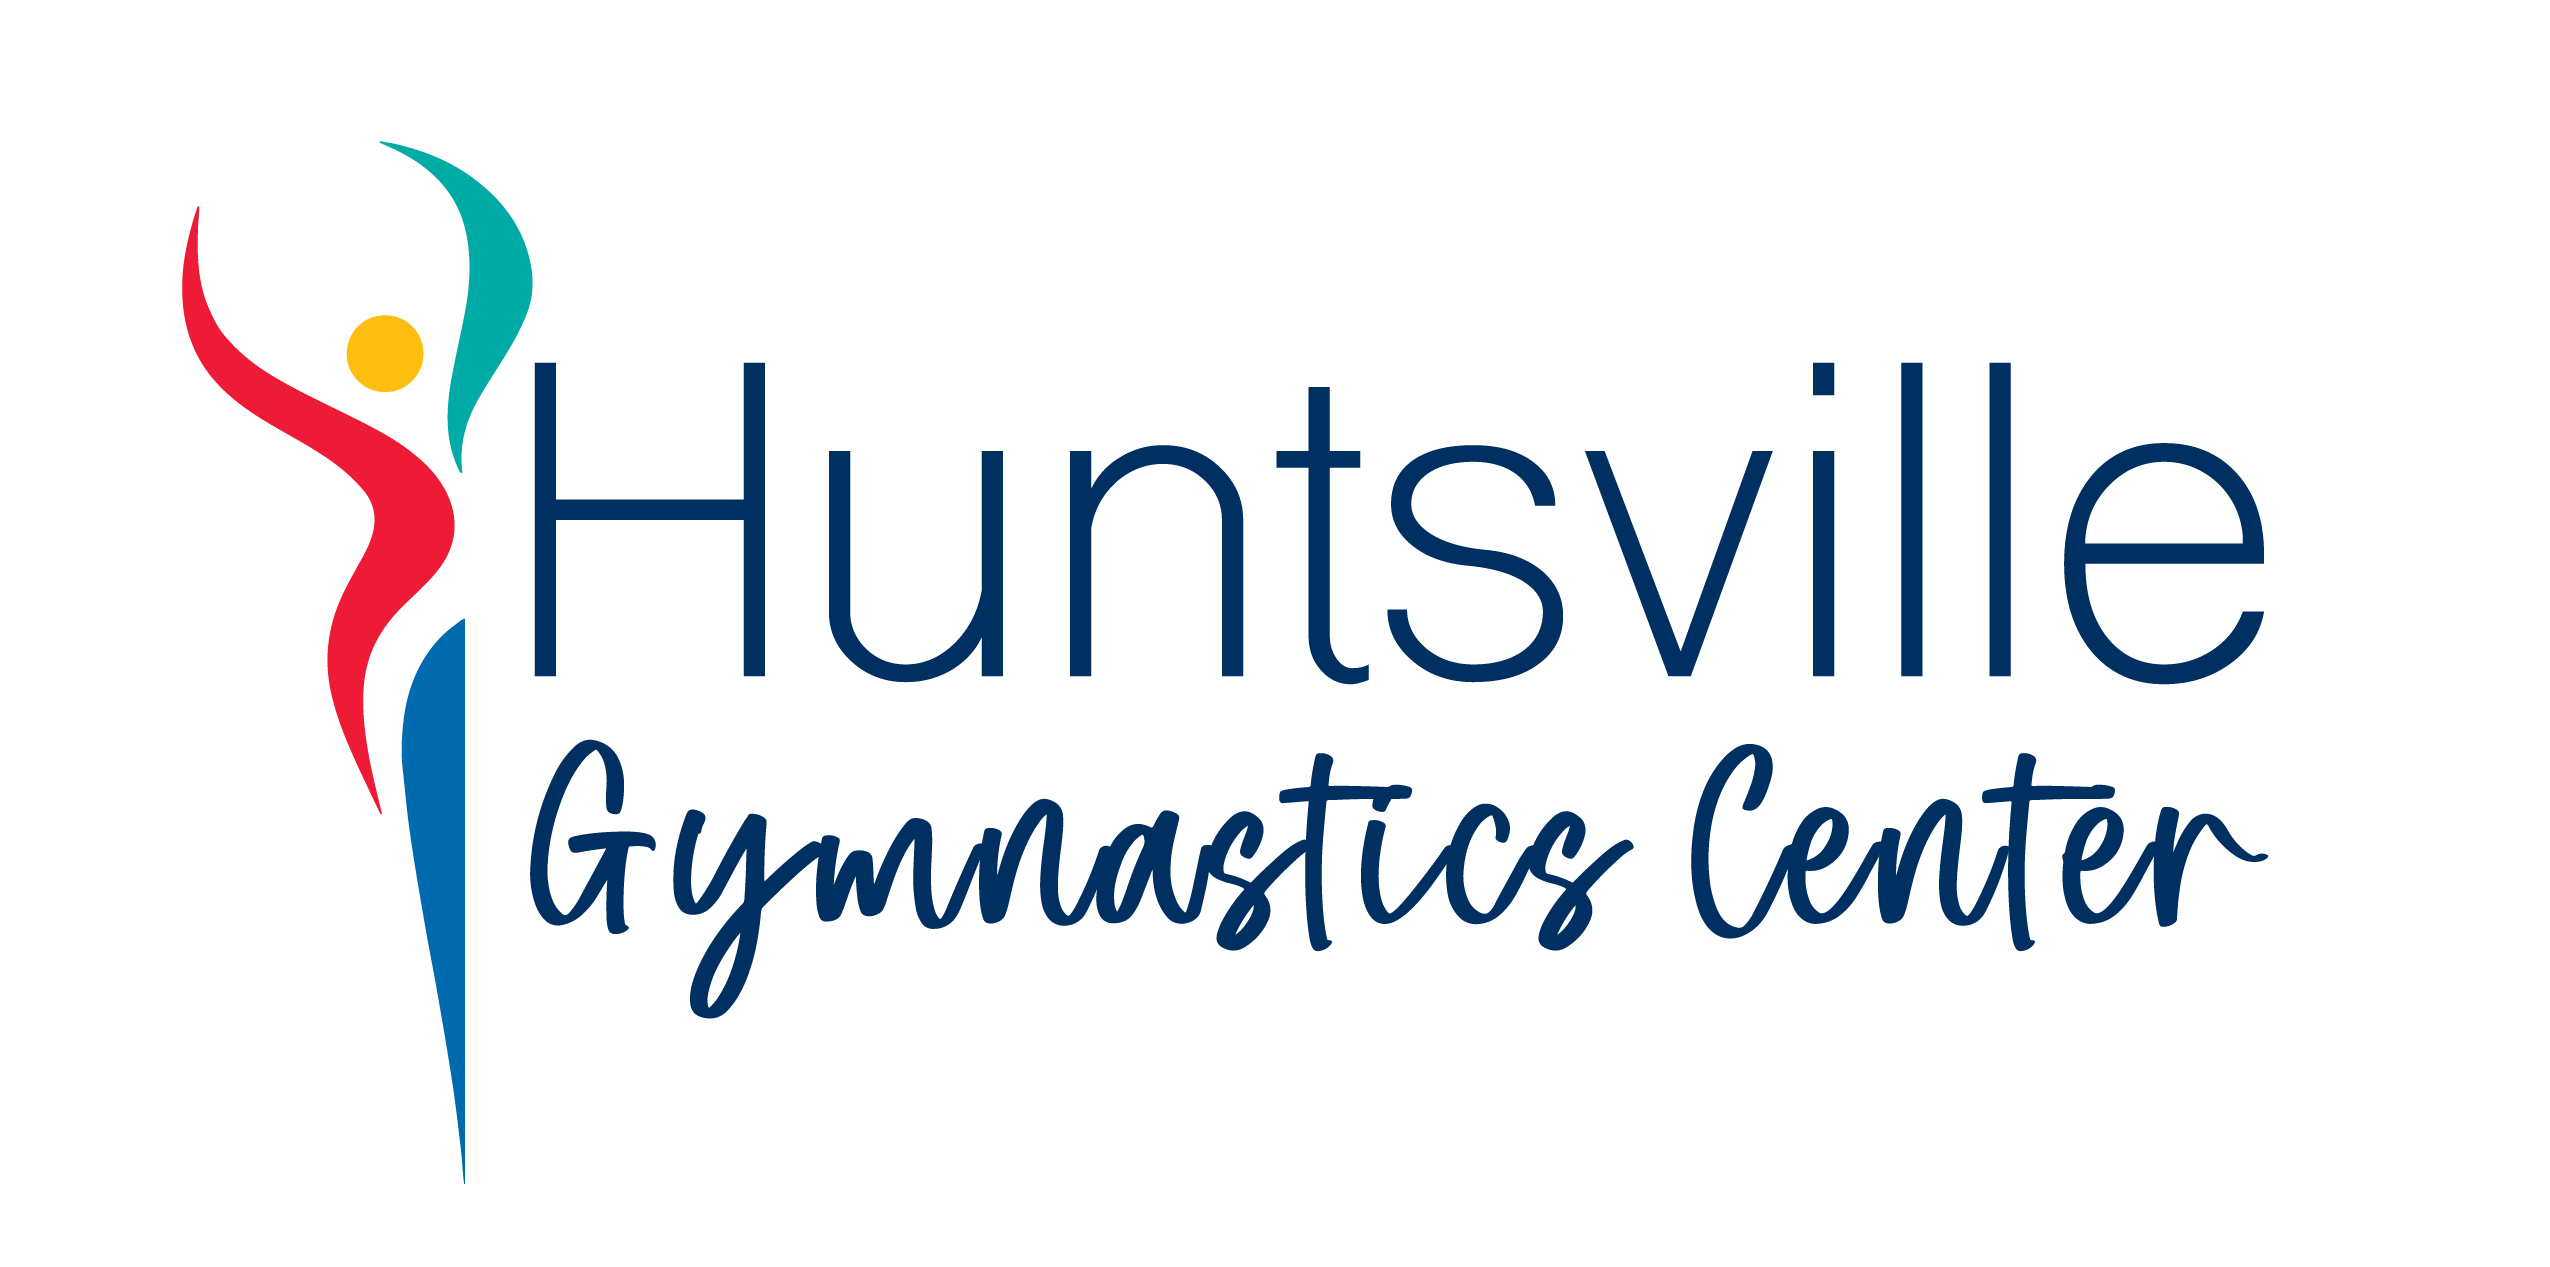 2021 Hsv Gym logo